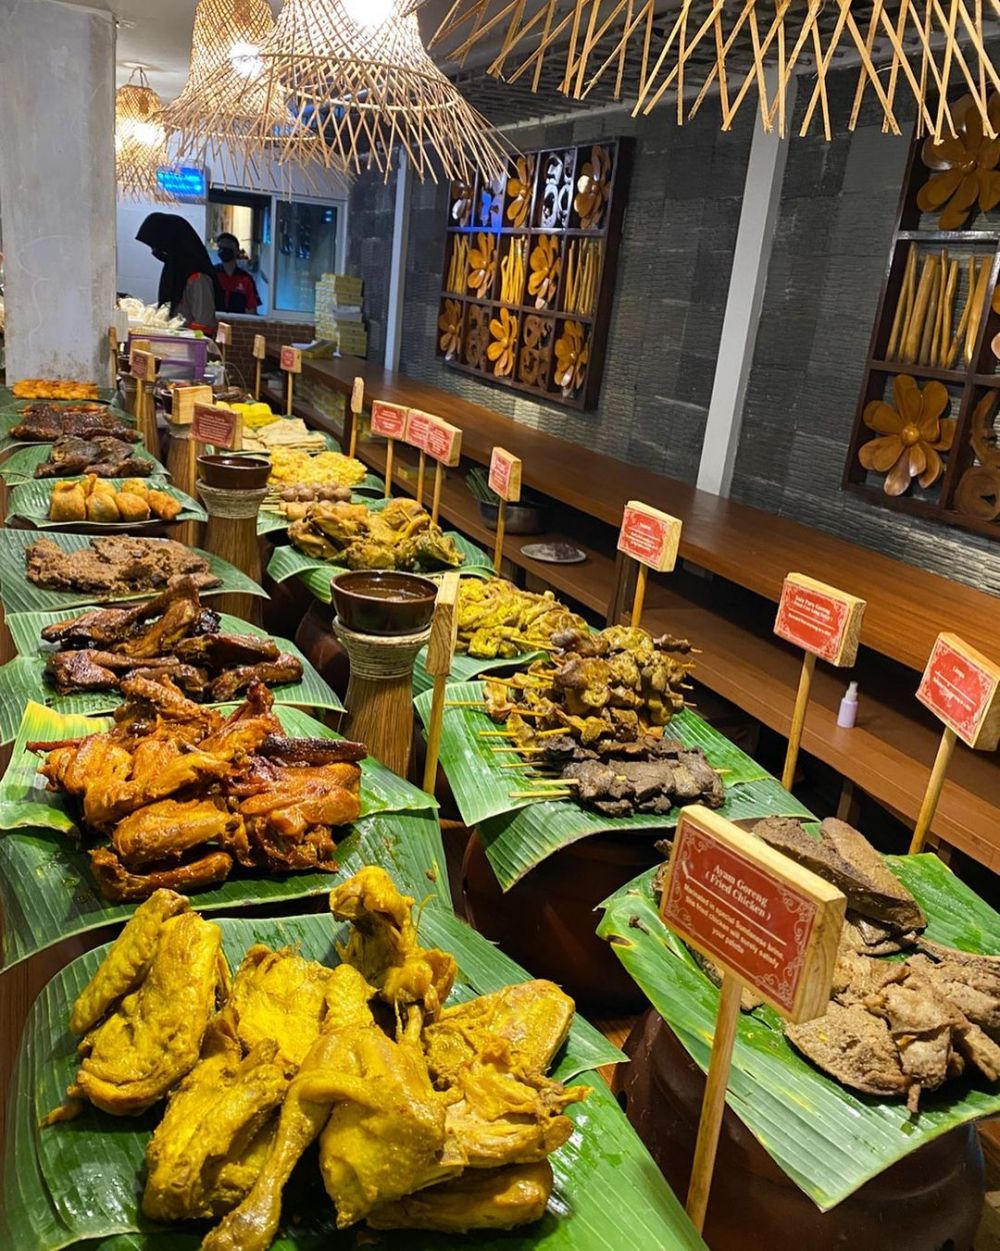 5 Rumah Makan Favorit di Jakarta – KabarTimur.co.id